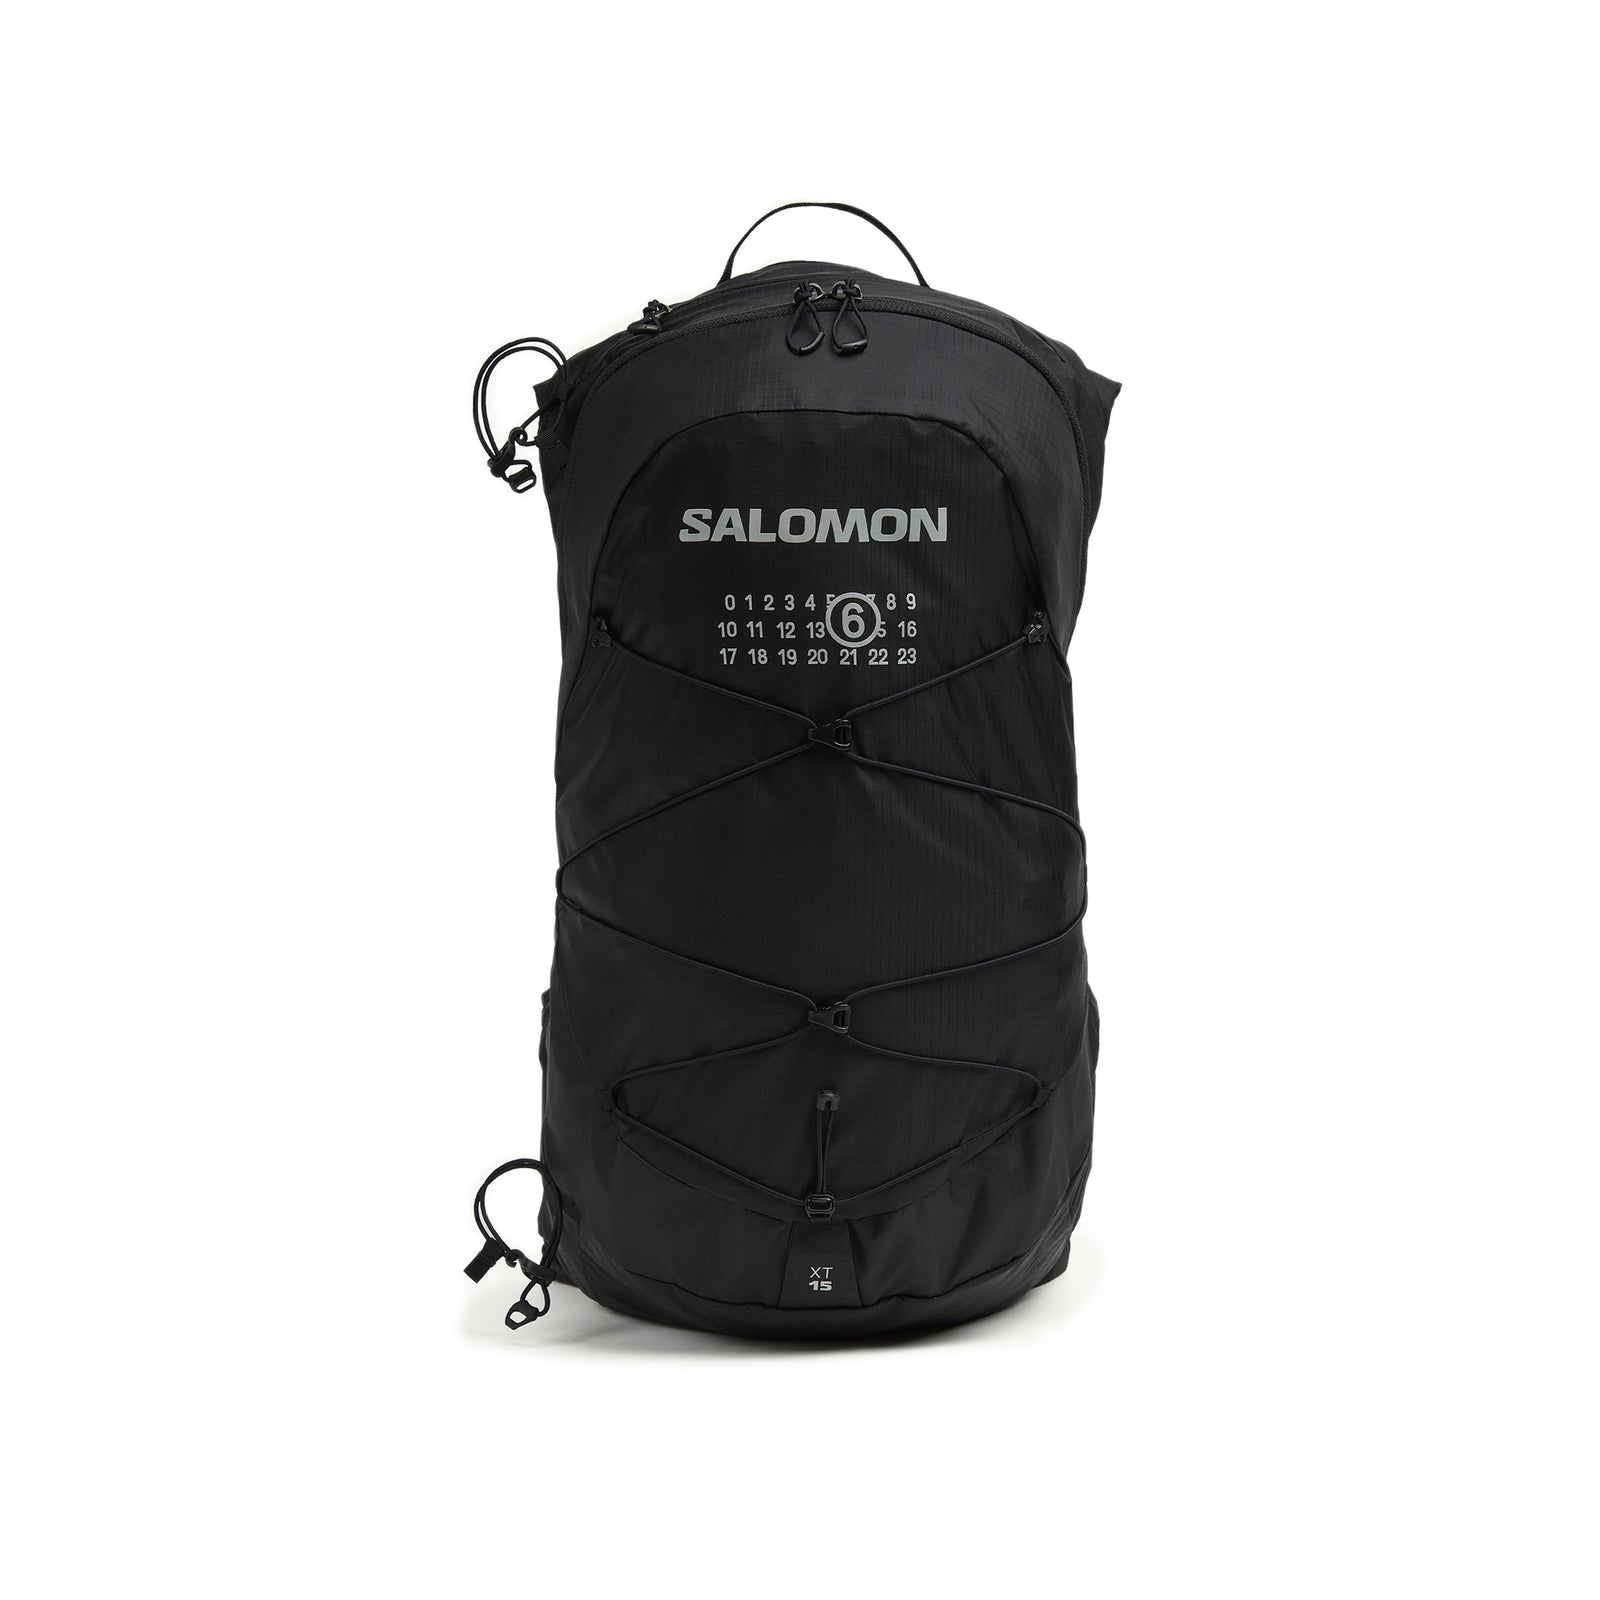 Maison Margiela x Salomon XT 15 MM6 Backpack Black in Leather - US